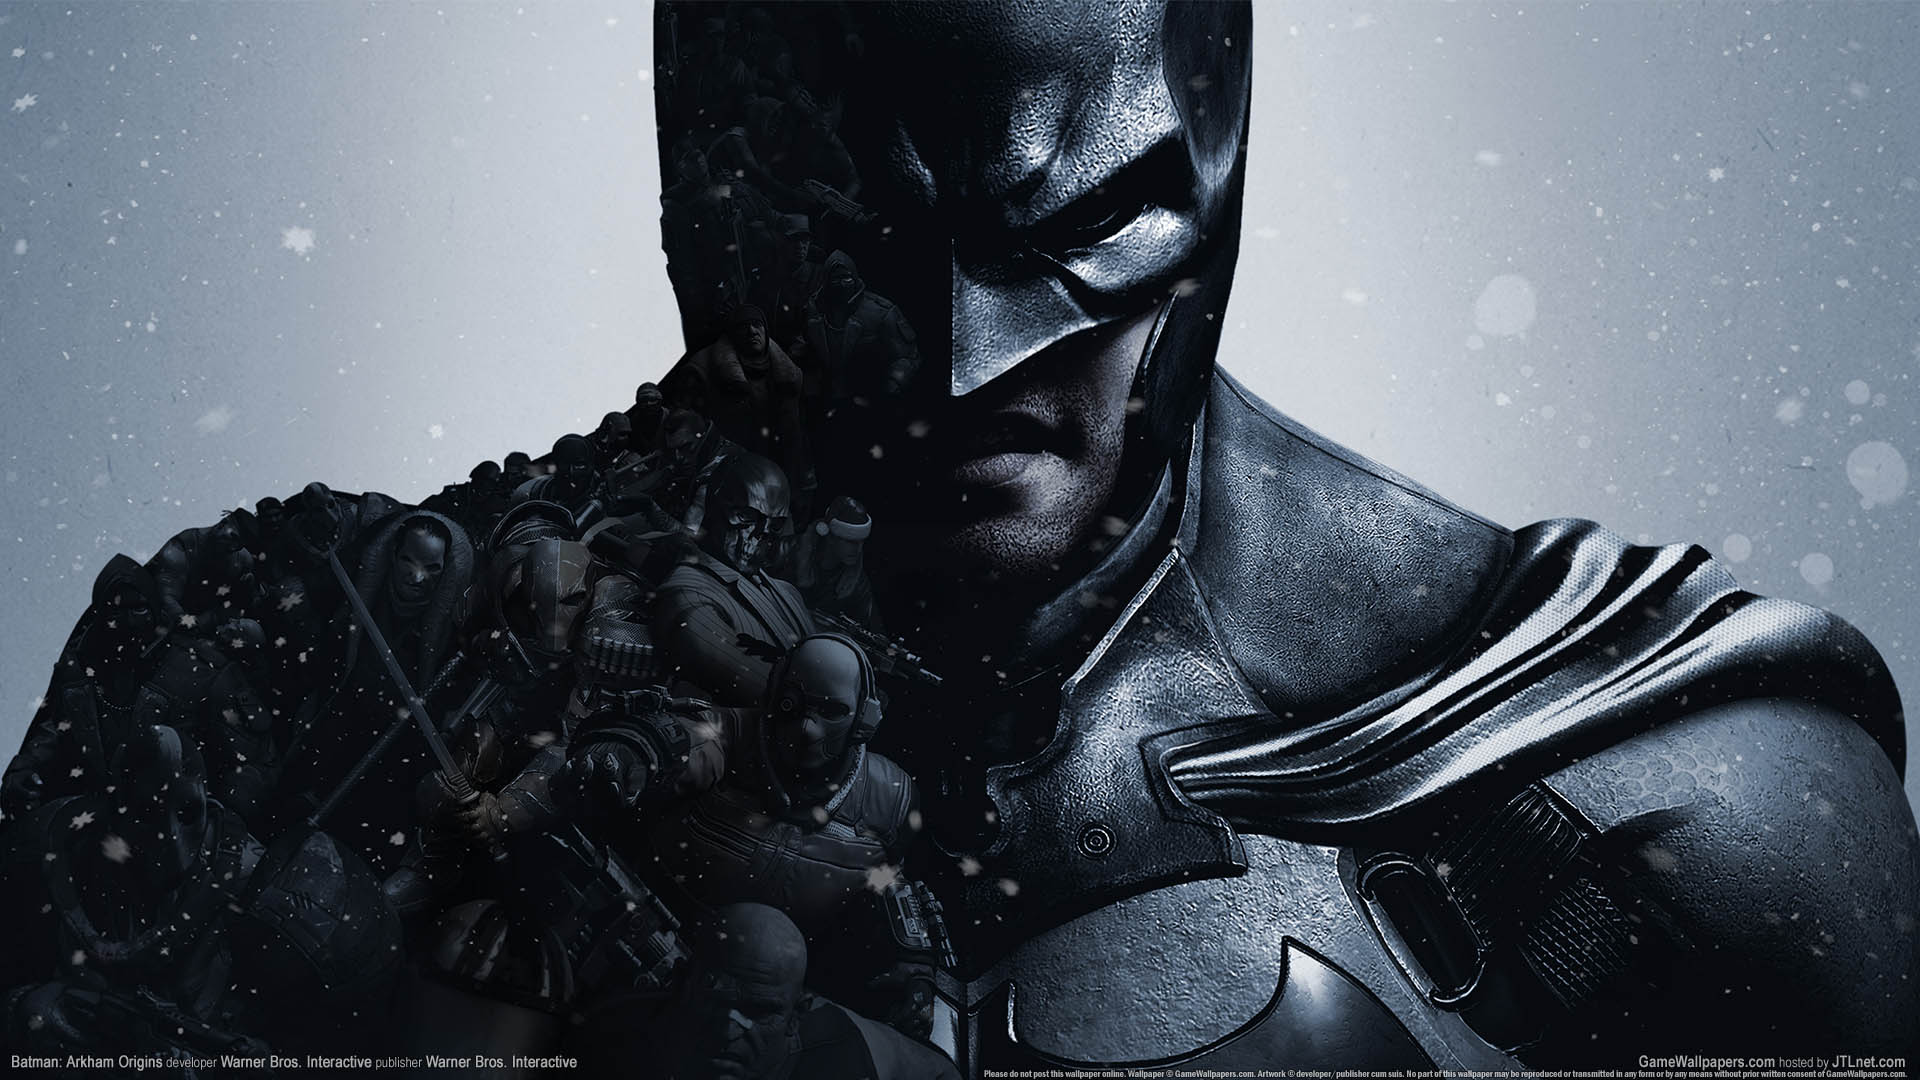 Batman: Arkham Origins wallpapers or desktop backgrounds